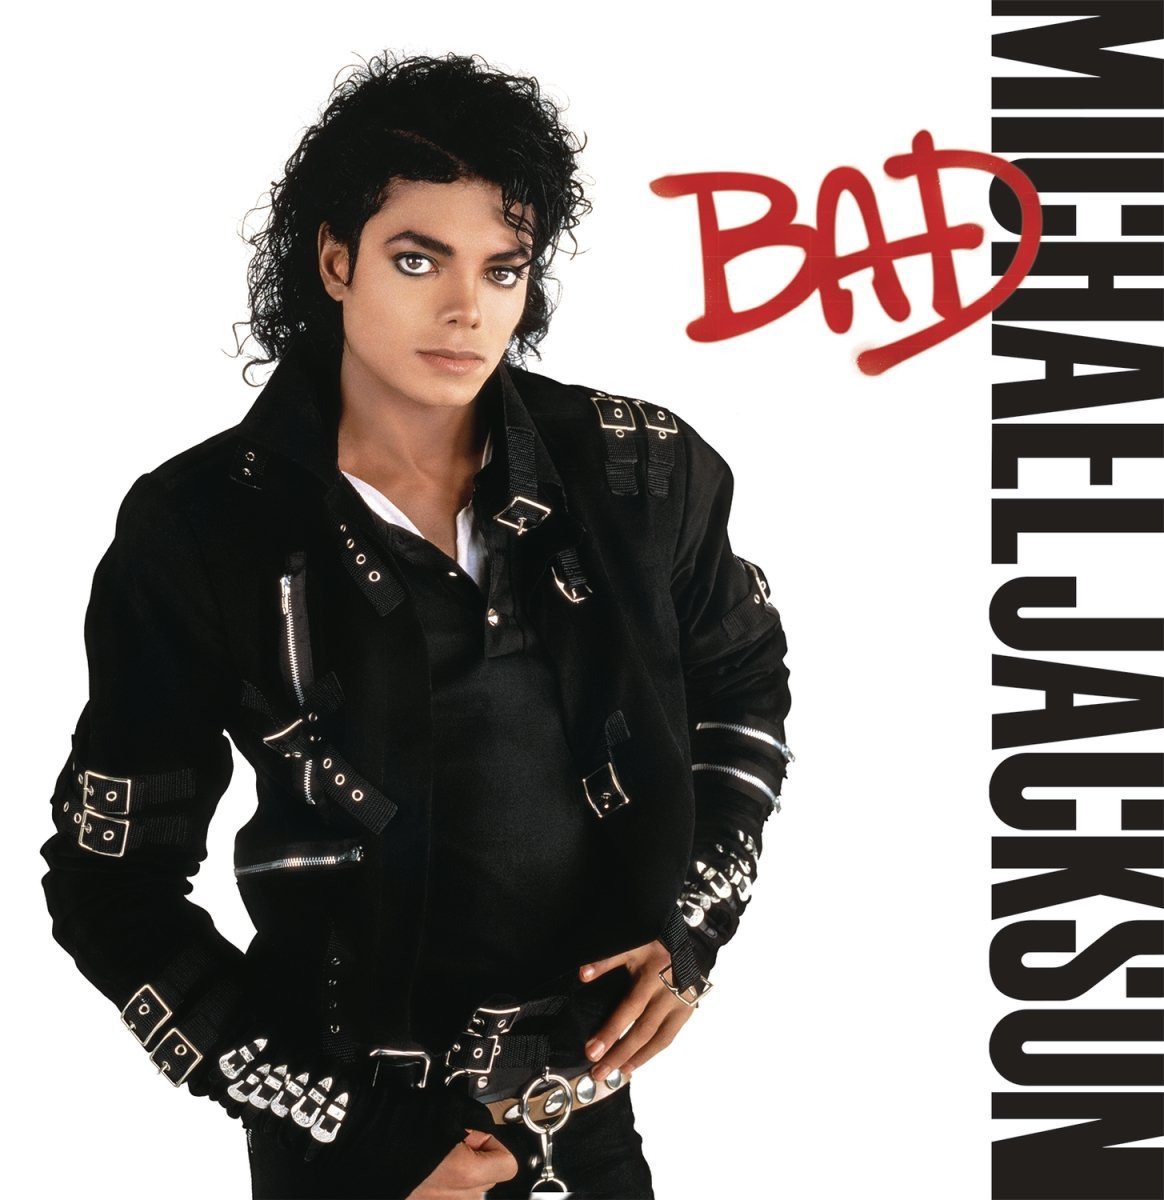 Na Vitrola: 30 anos de Bad, de Michael Jackson